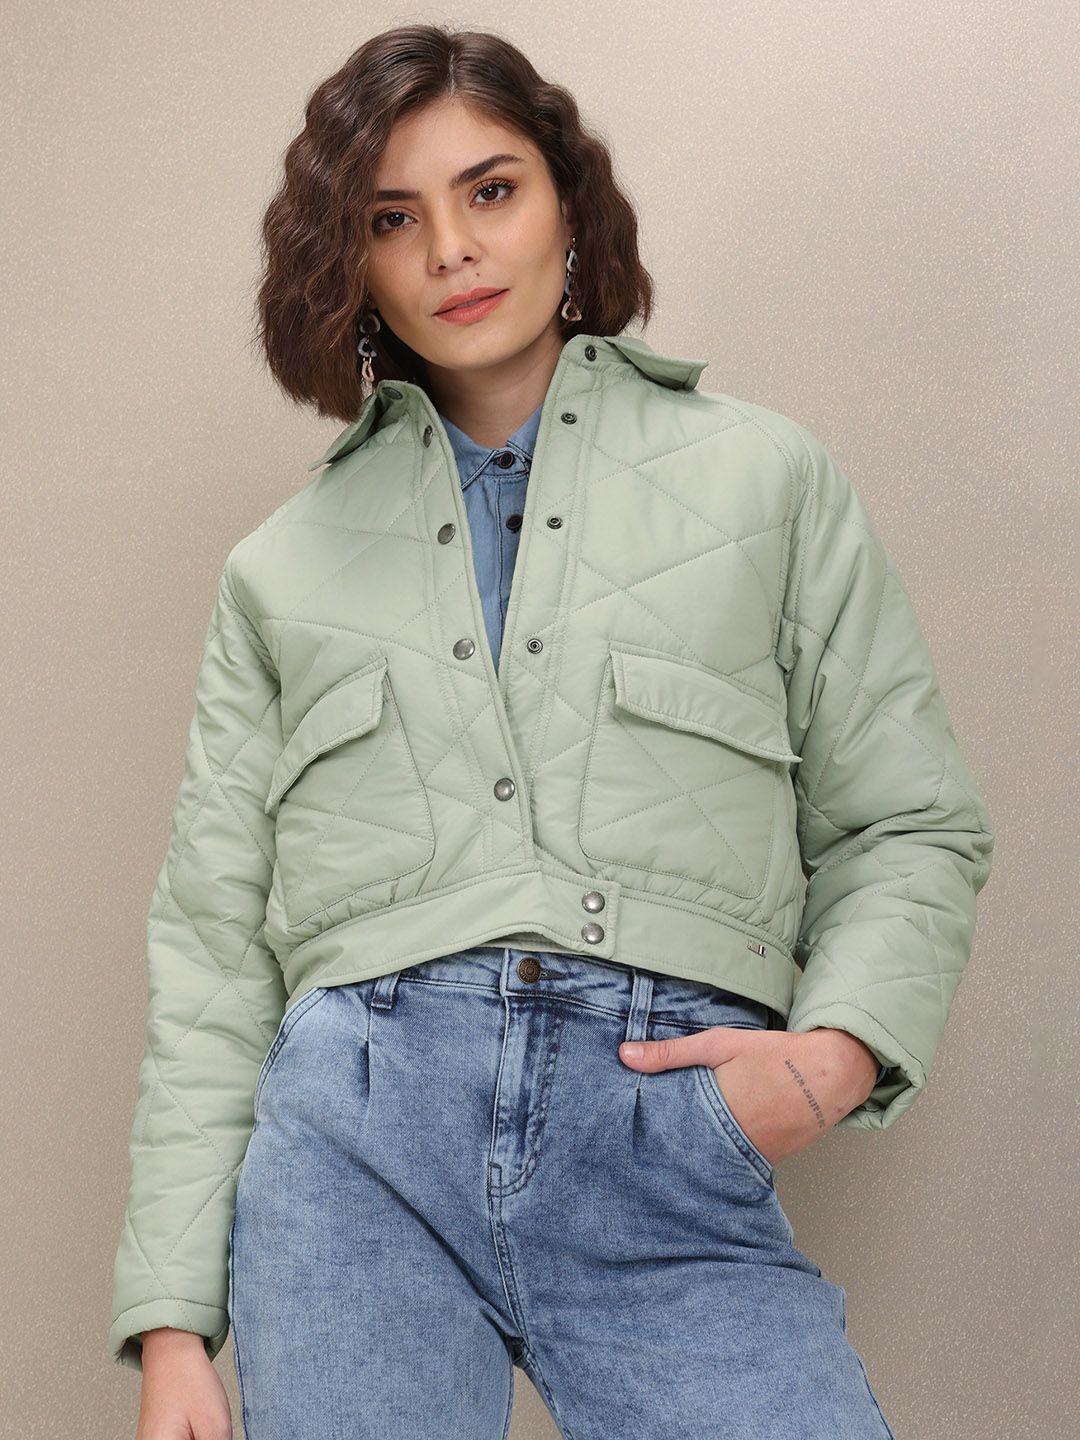 u.s. polo assn. women green quilted jacket